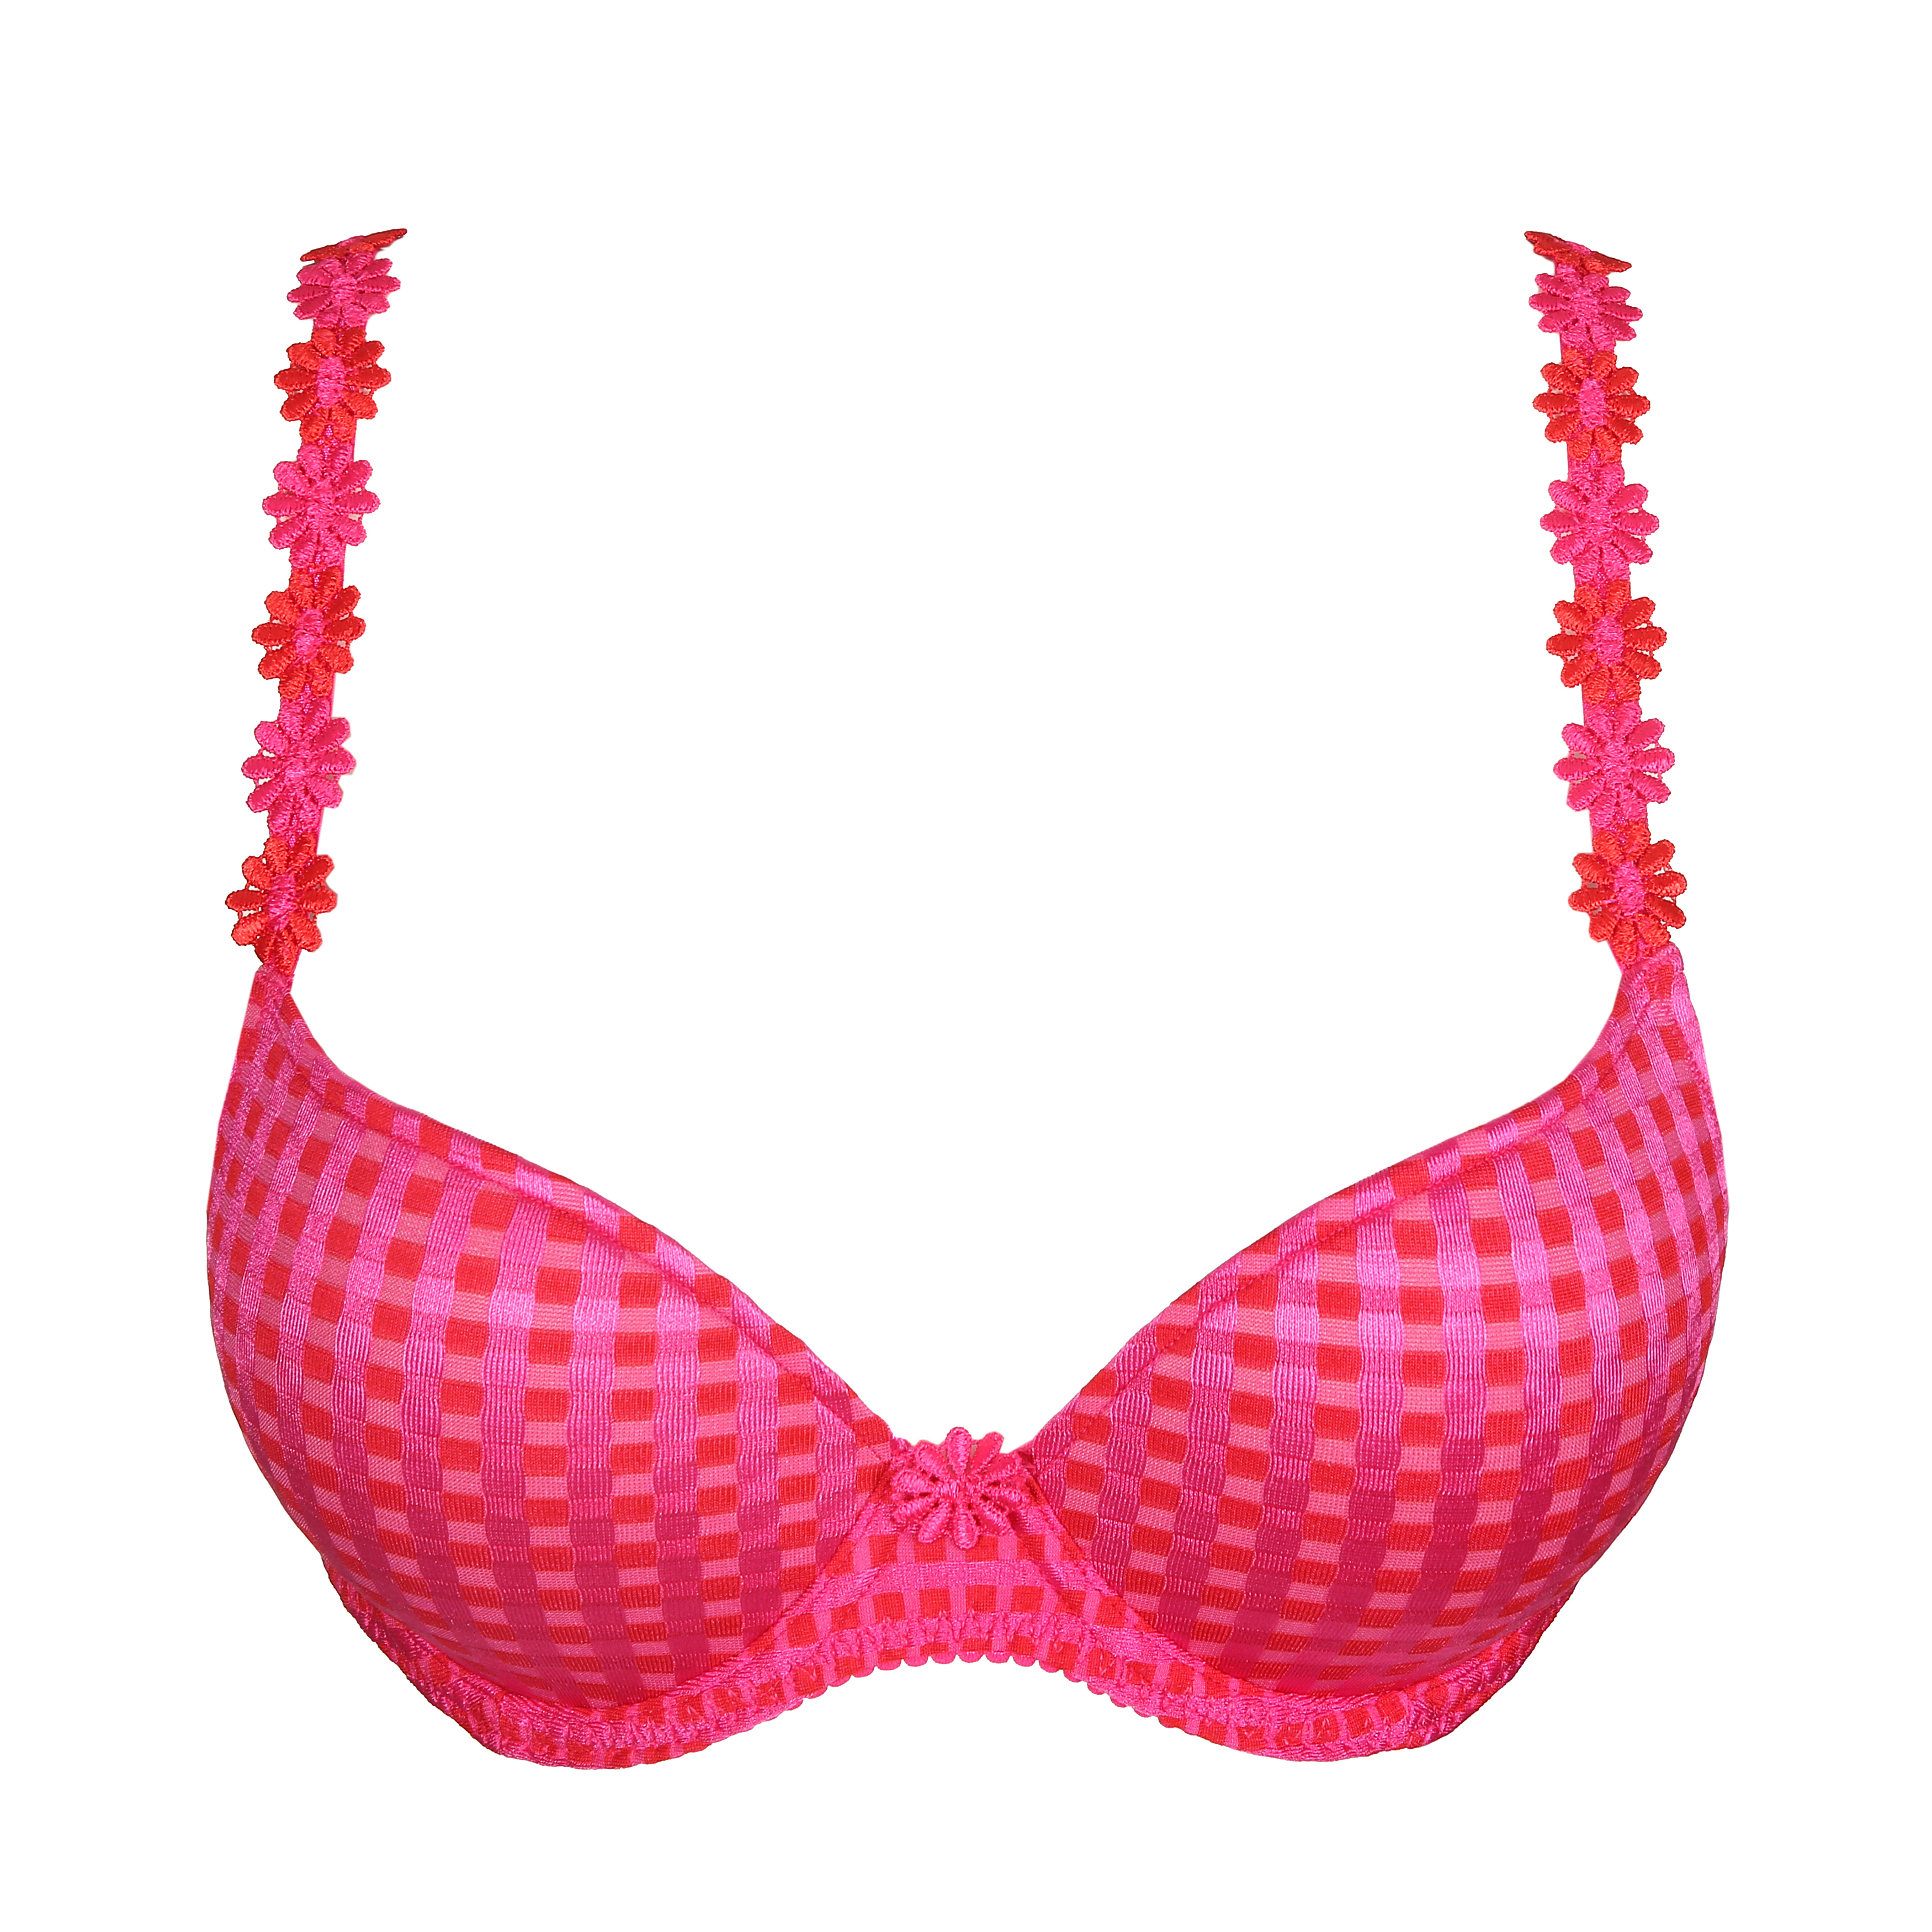 Marie Jo AVERO electric pink push-up bra